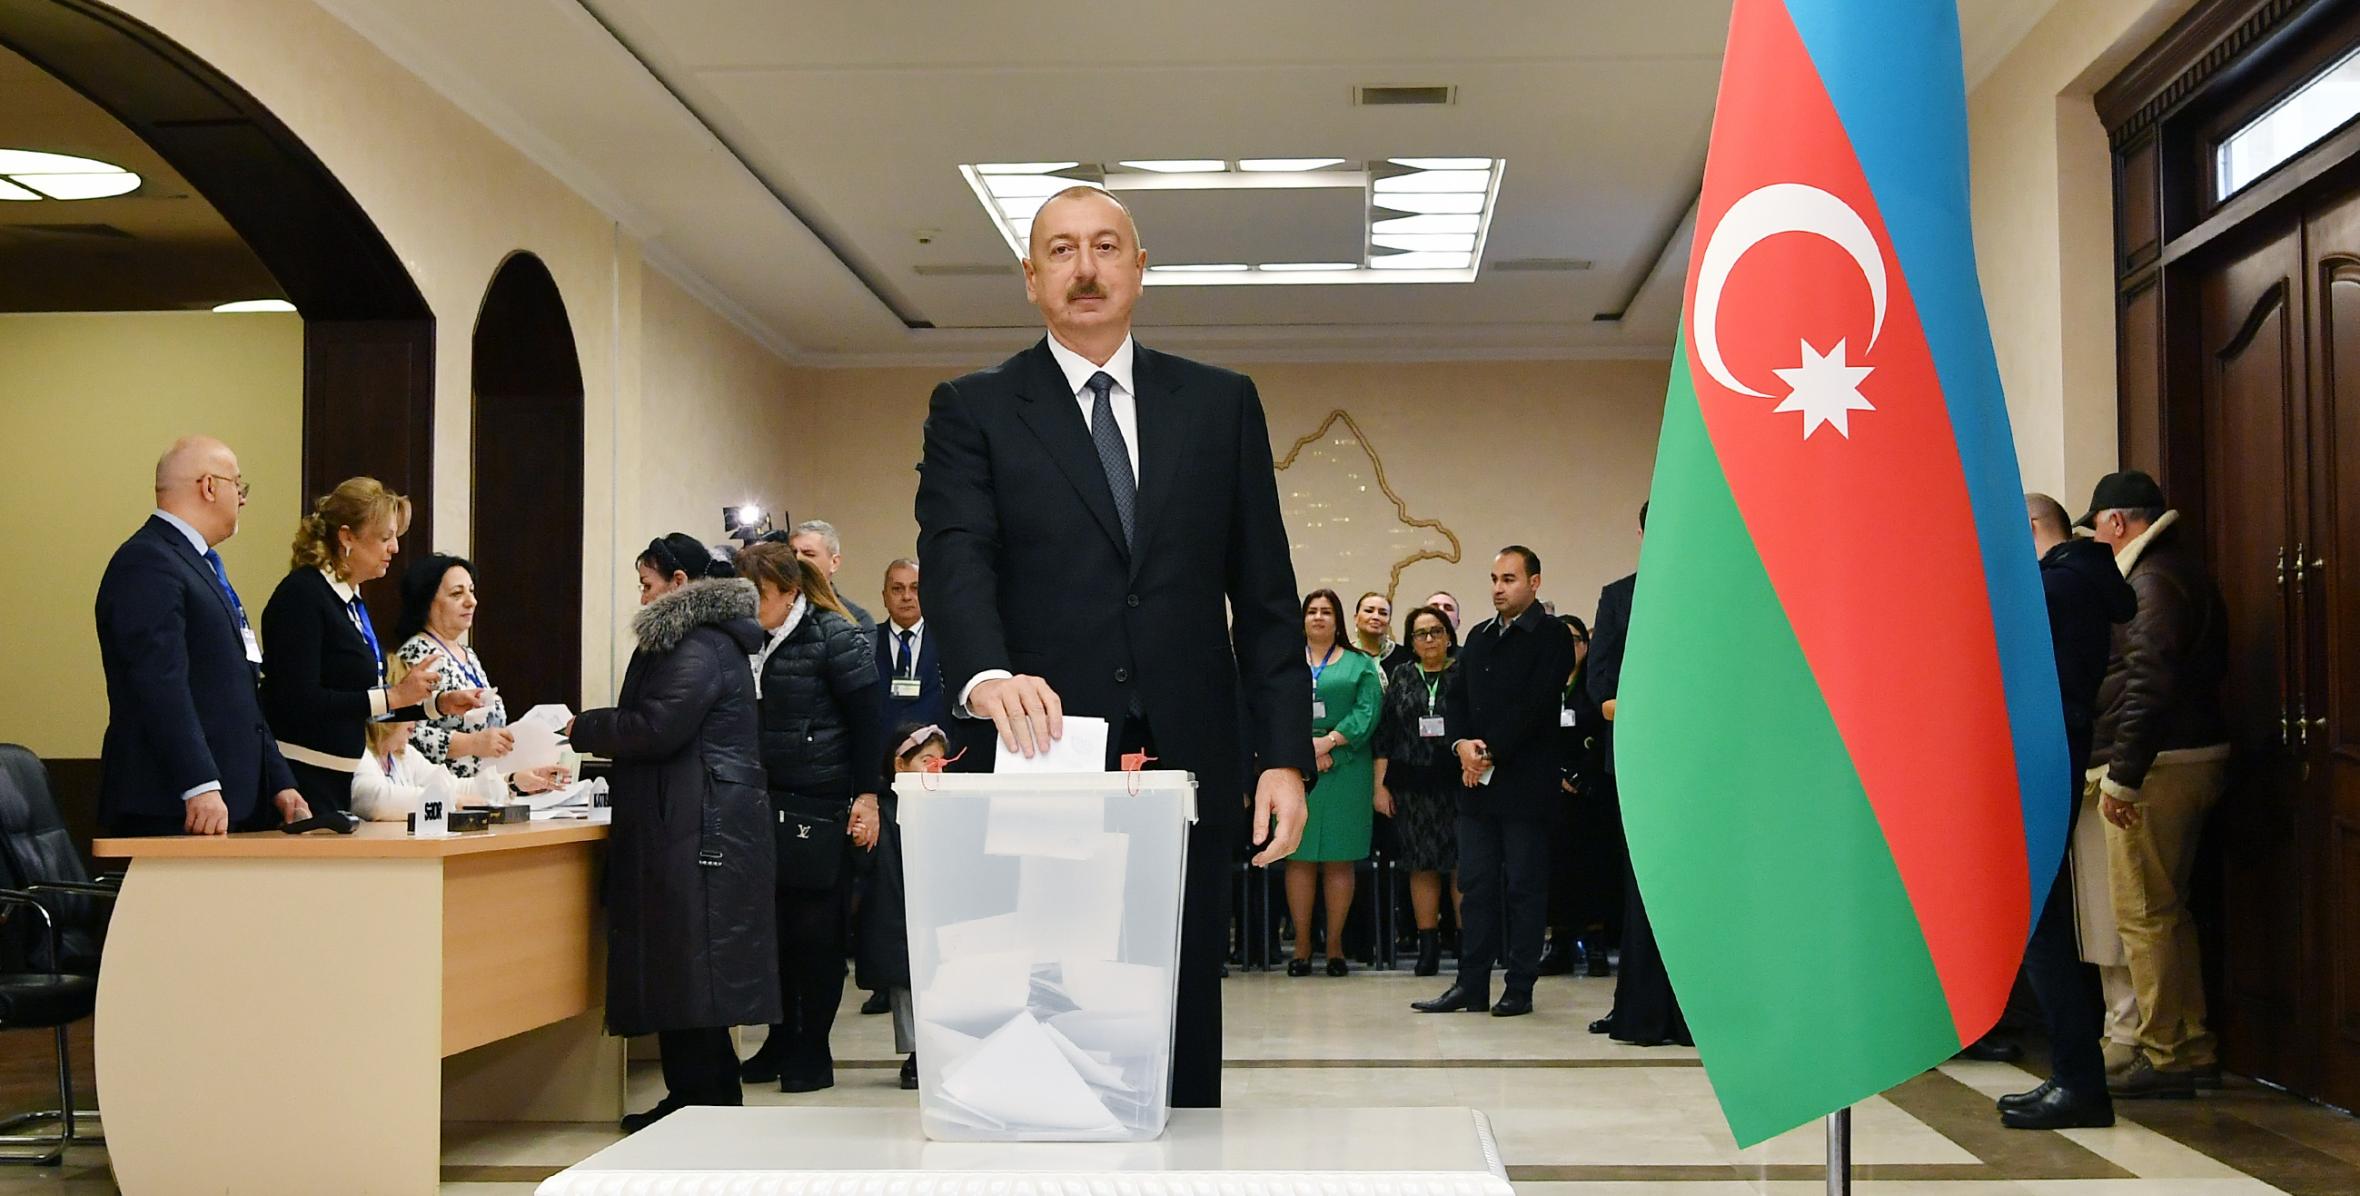 Ilham Aliyev voted at polling station No 6